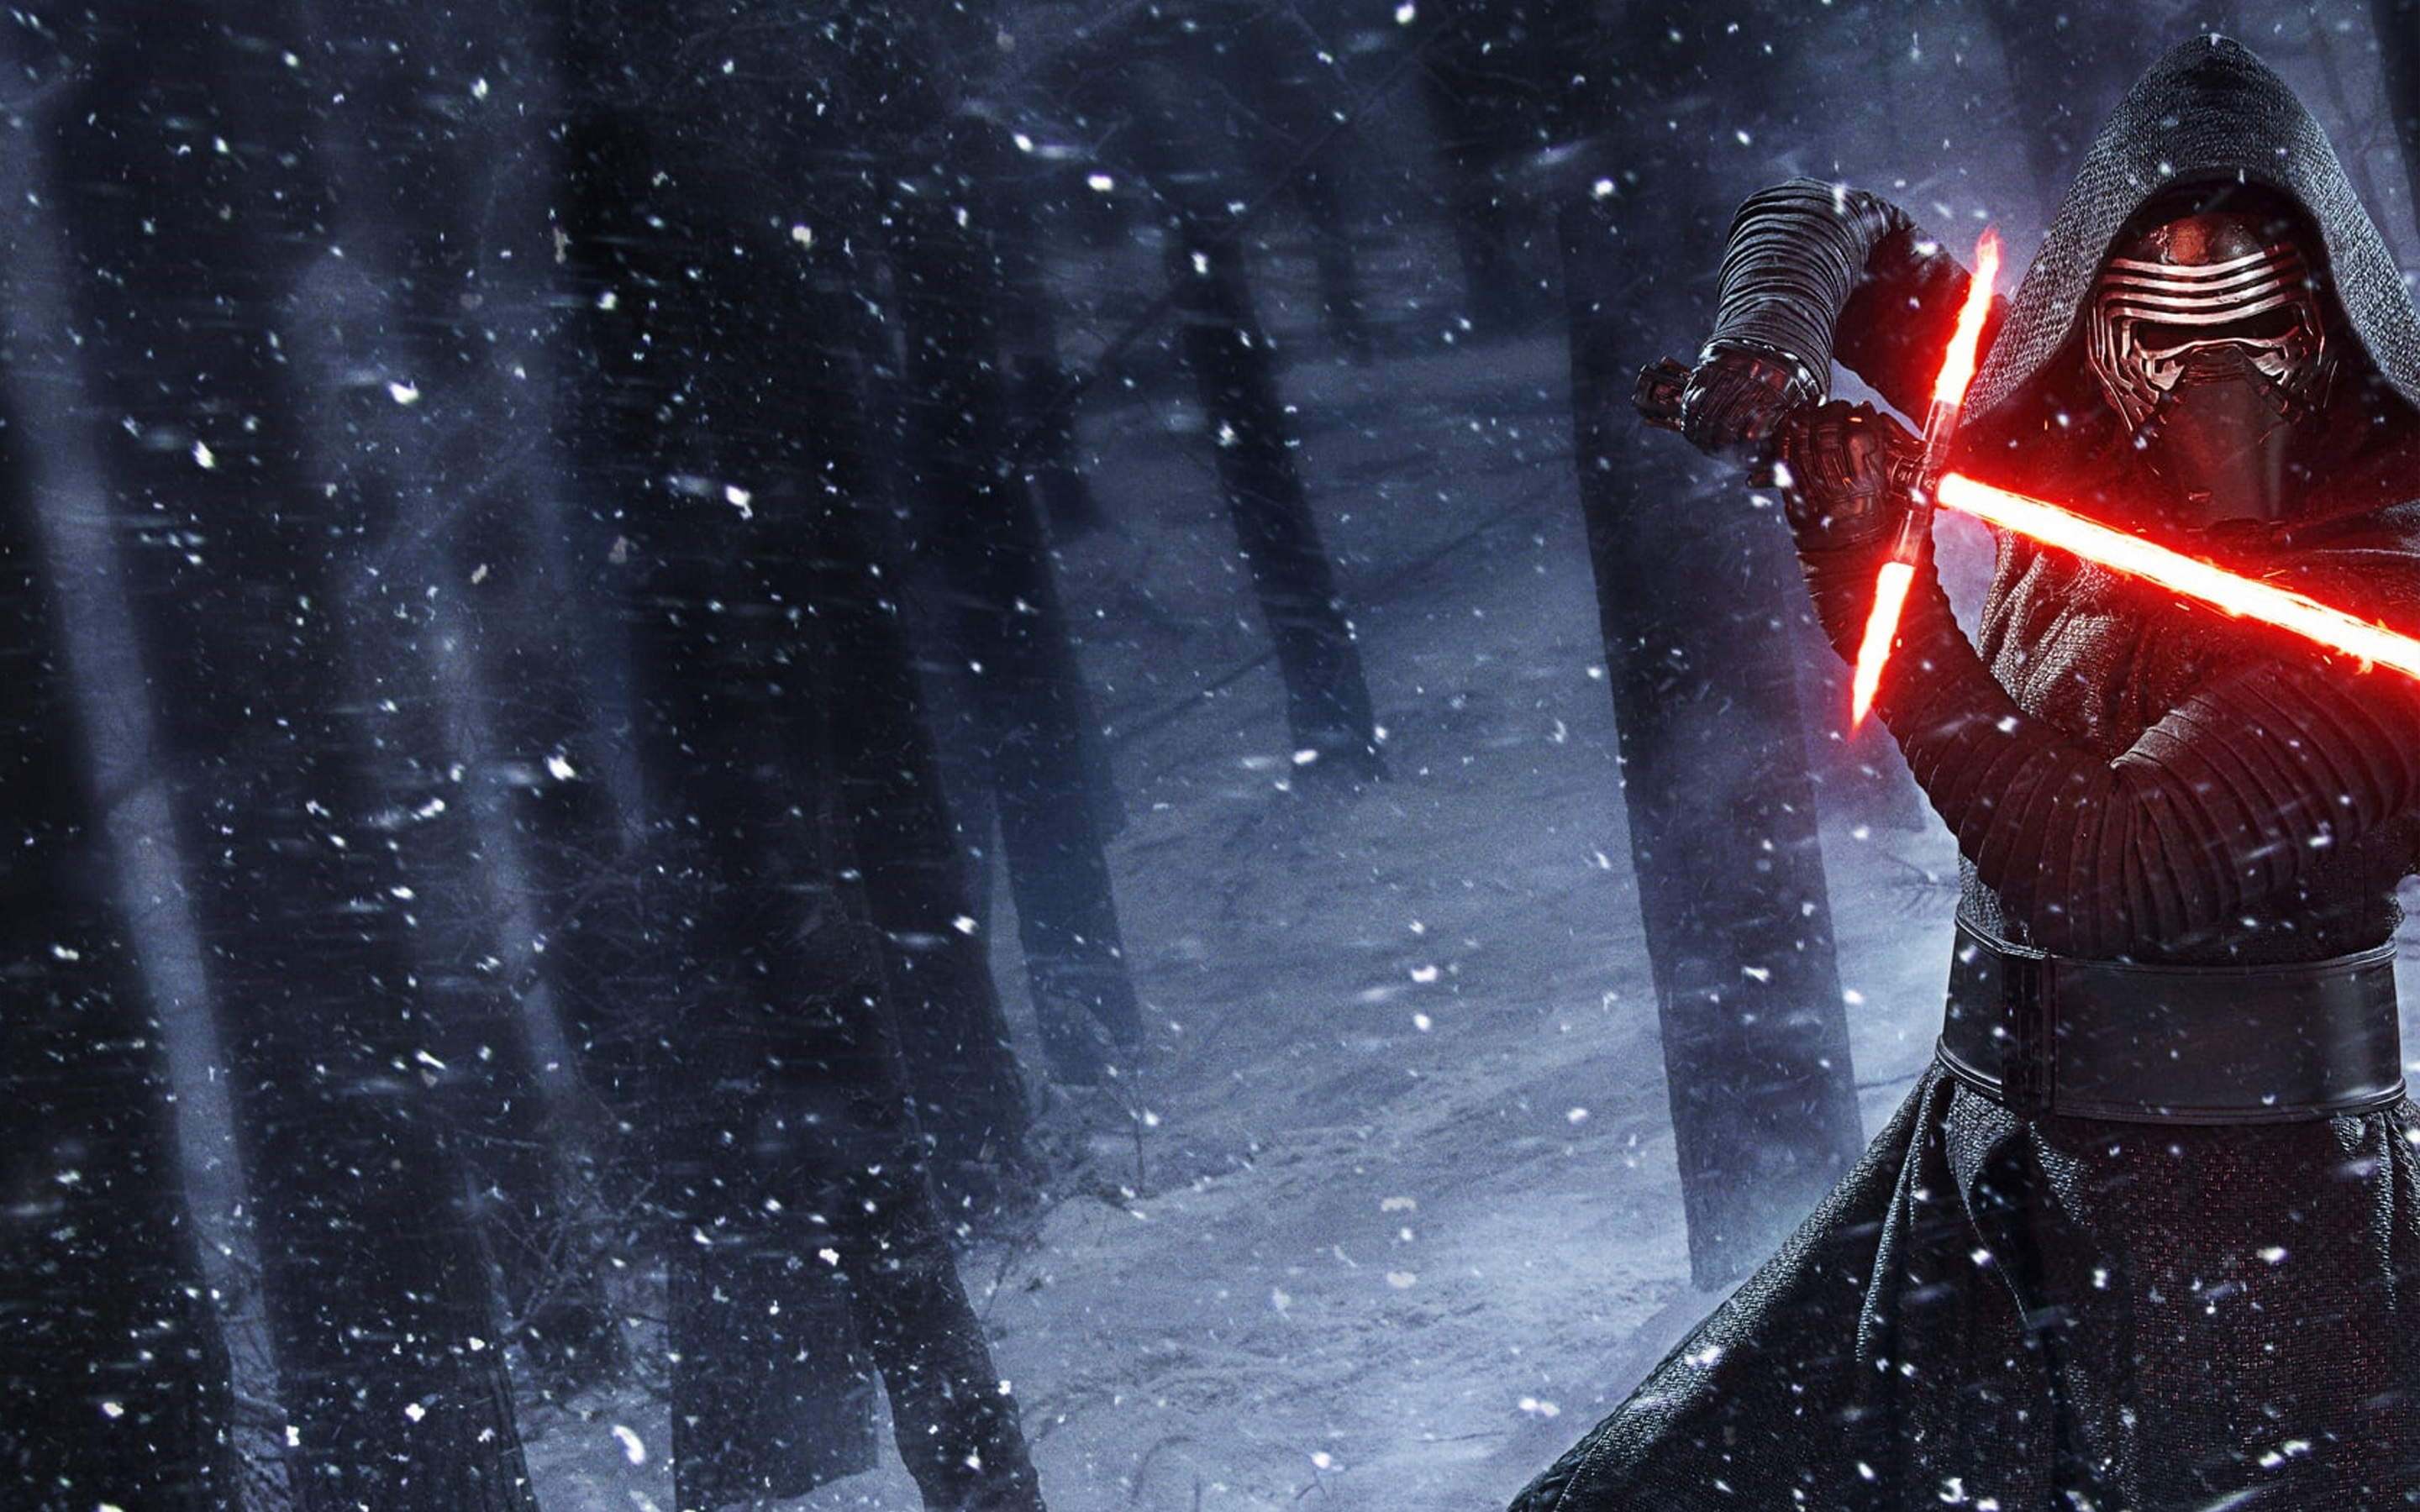 Kylo Ren 2015 Star Wars Lightsaber Poster Wallpapers | HD ...